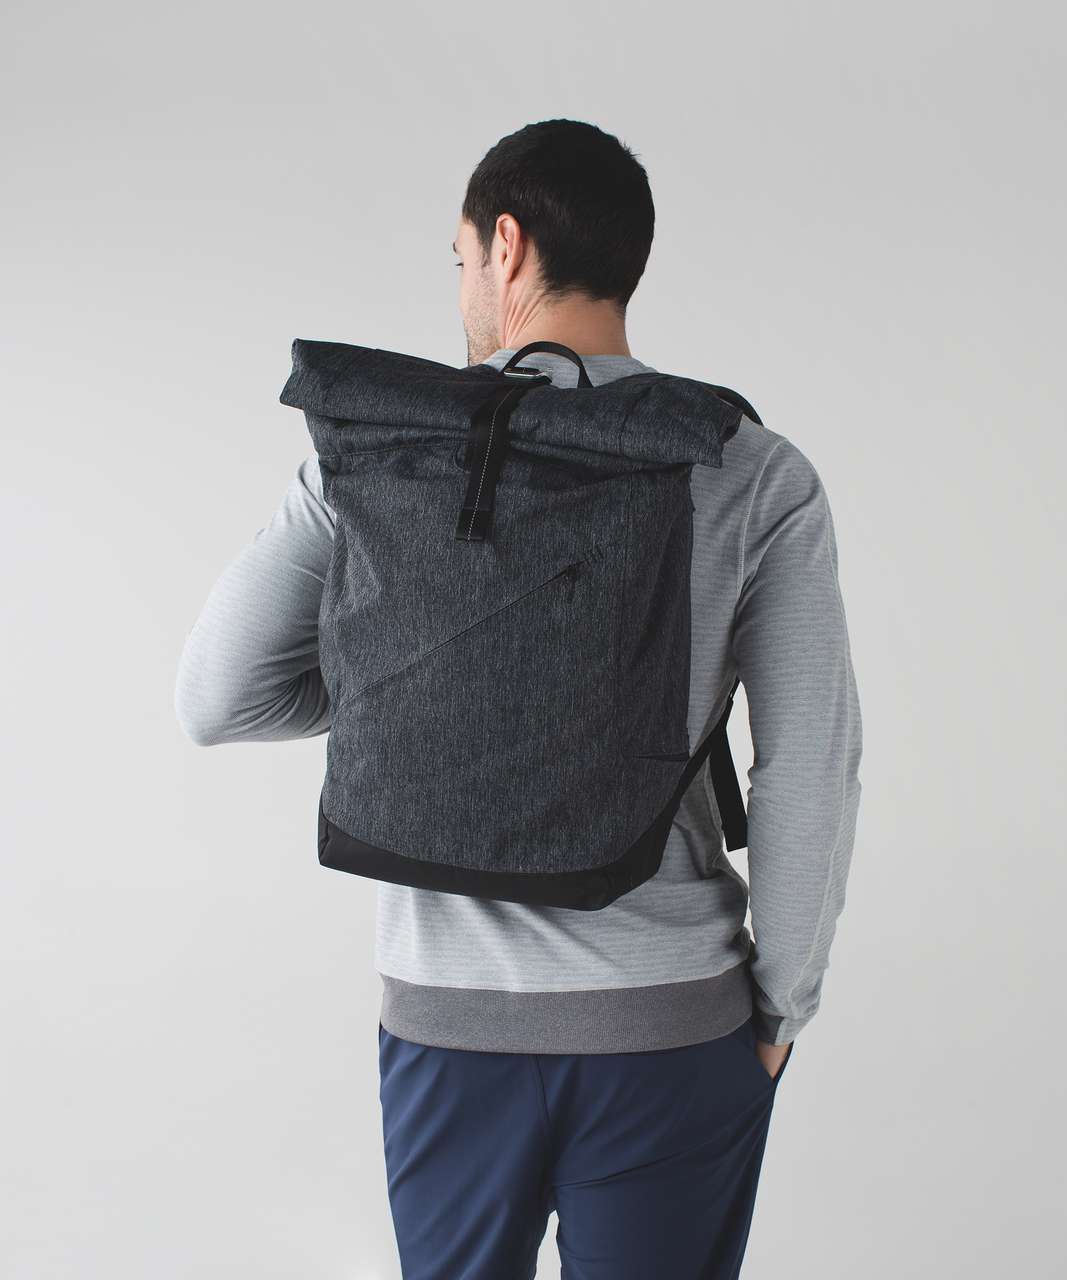 lululemon roll top backpack